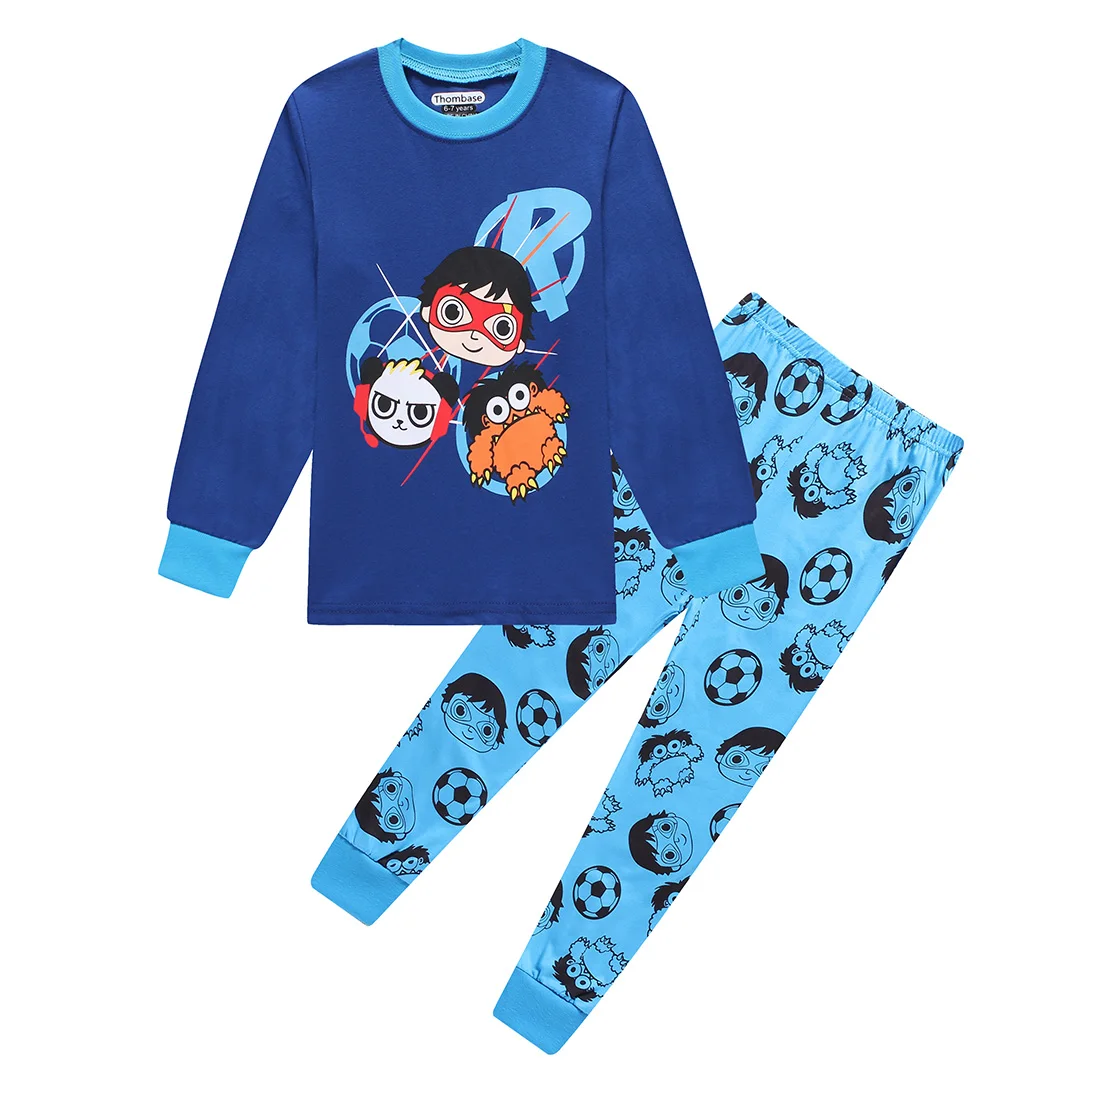 Little Boys Ryans world Clothes Clothing kids girls christmas pajamas PJs T-shirt + pant set pyjamas pijamas nightgown superman